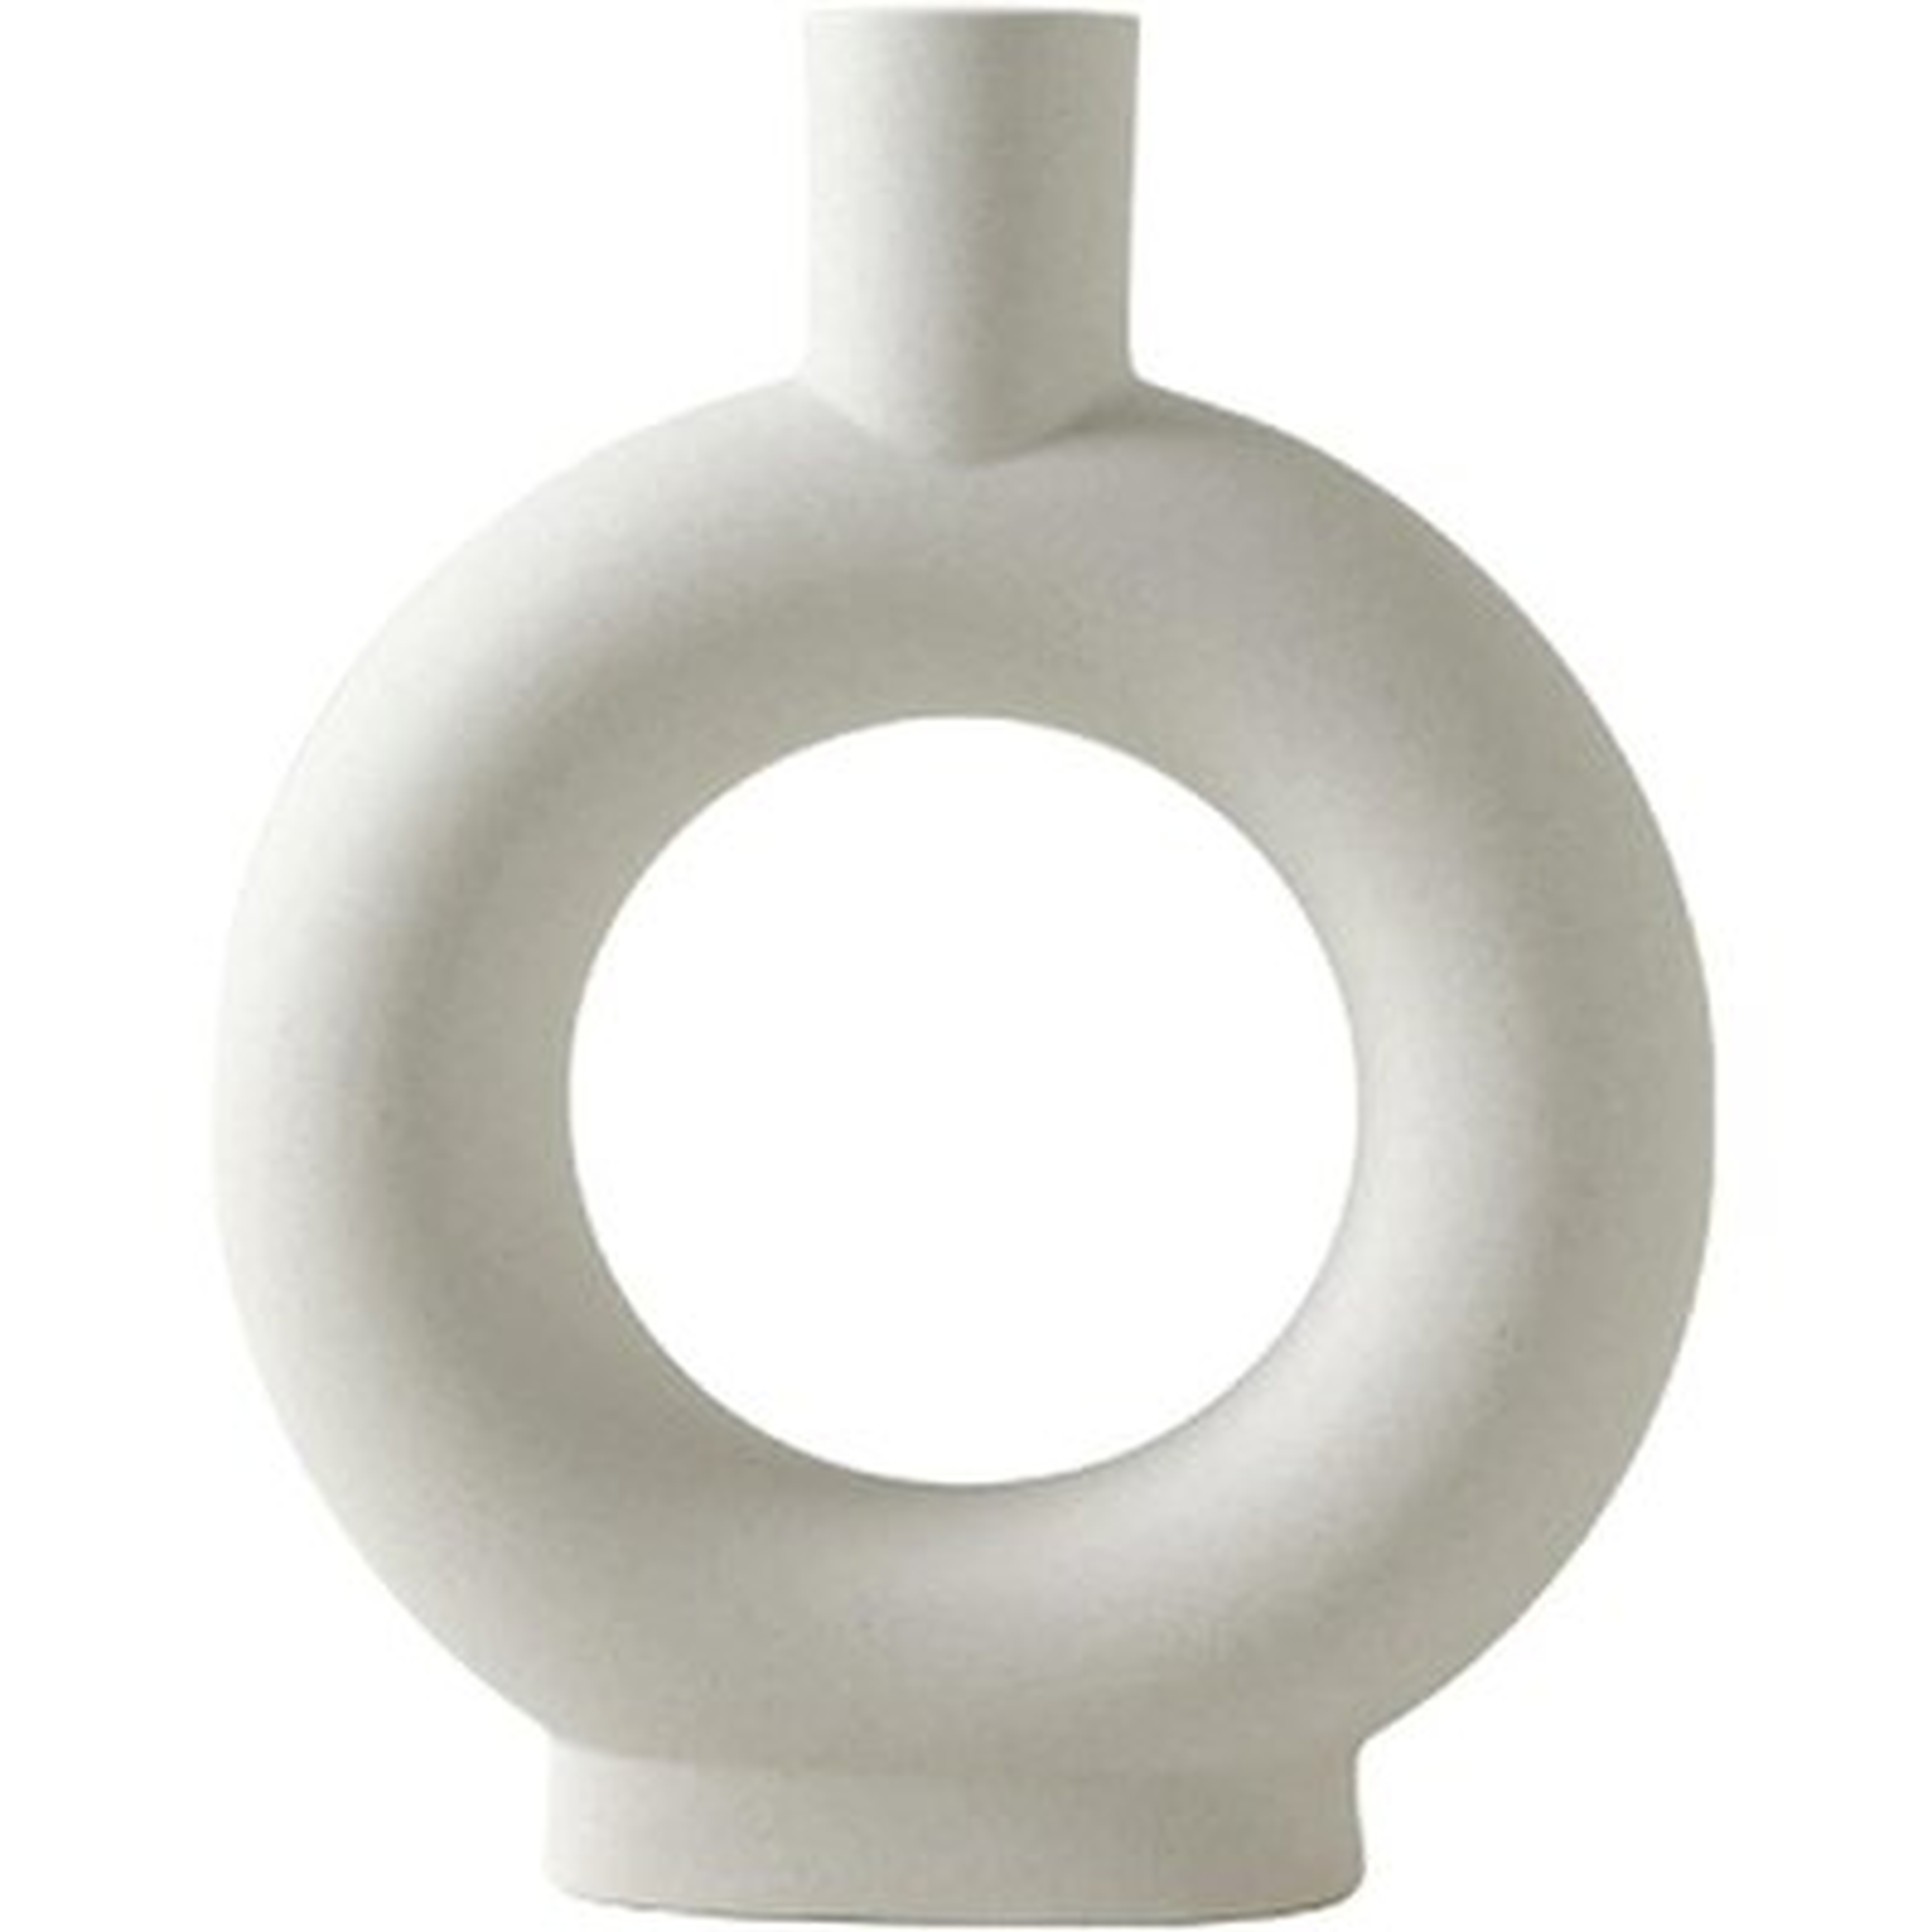 Burgue Ceramic Table Vase, White, 9" - Wayfair